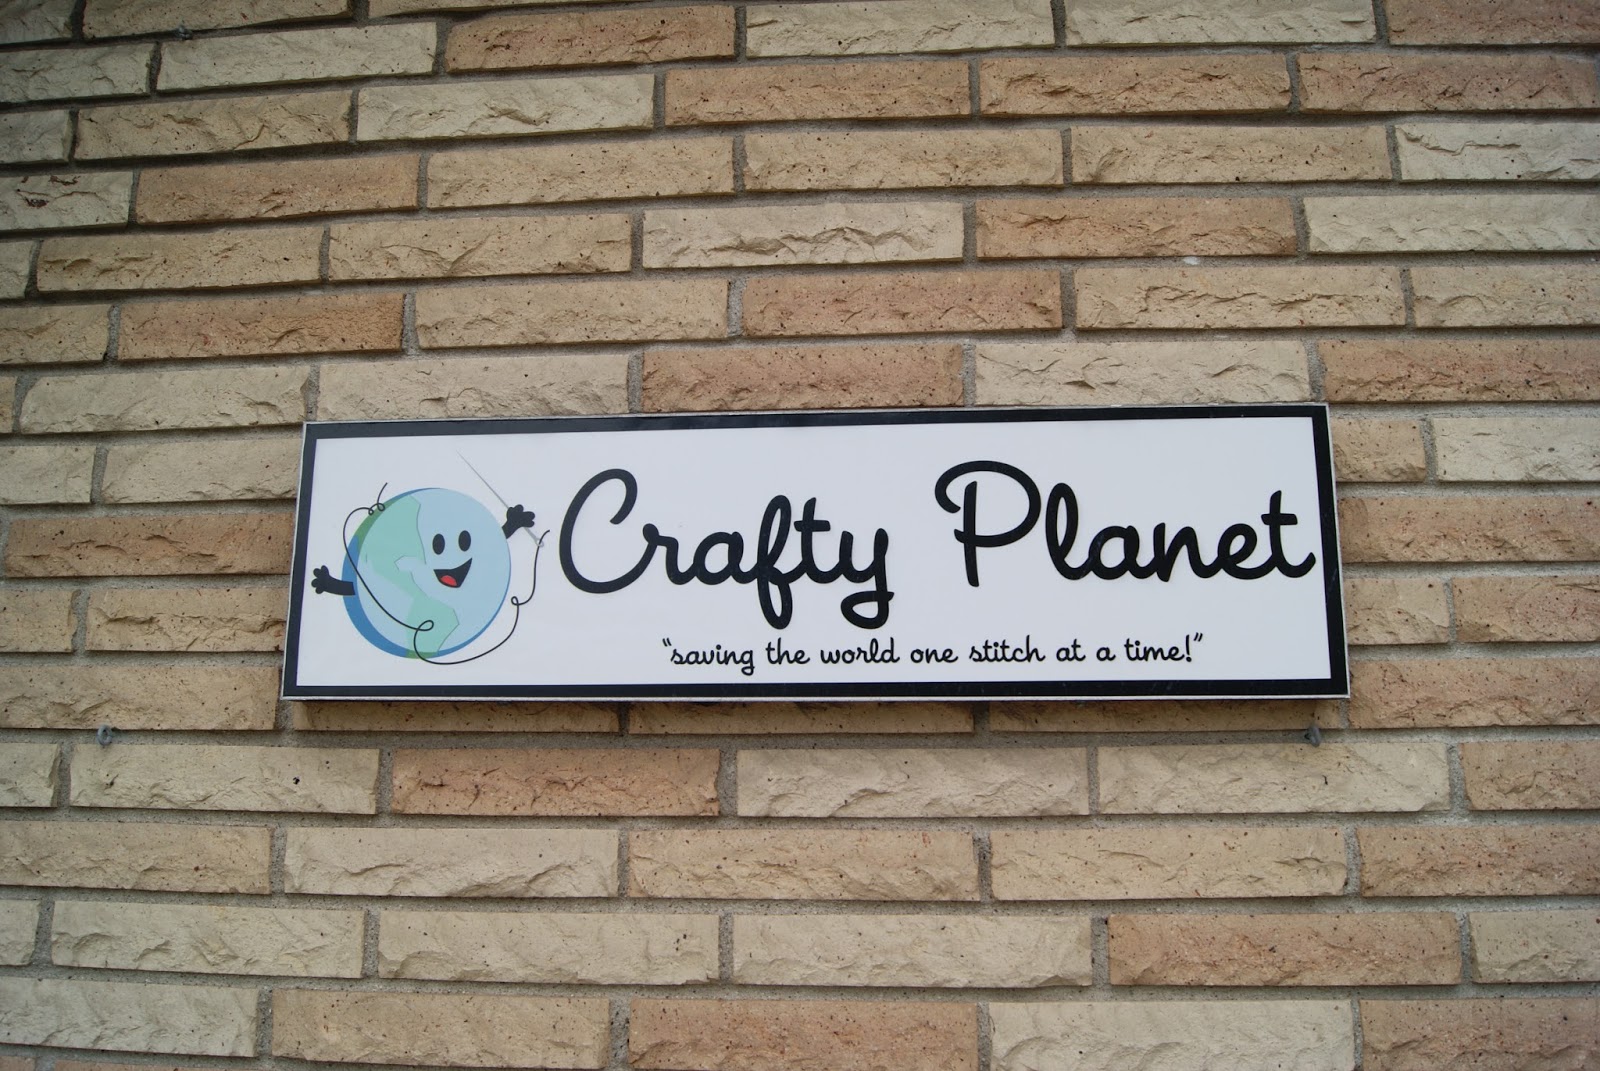 Crafty Planet in Minneapolis, Minnesota